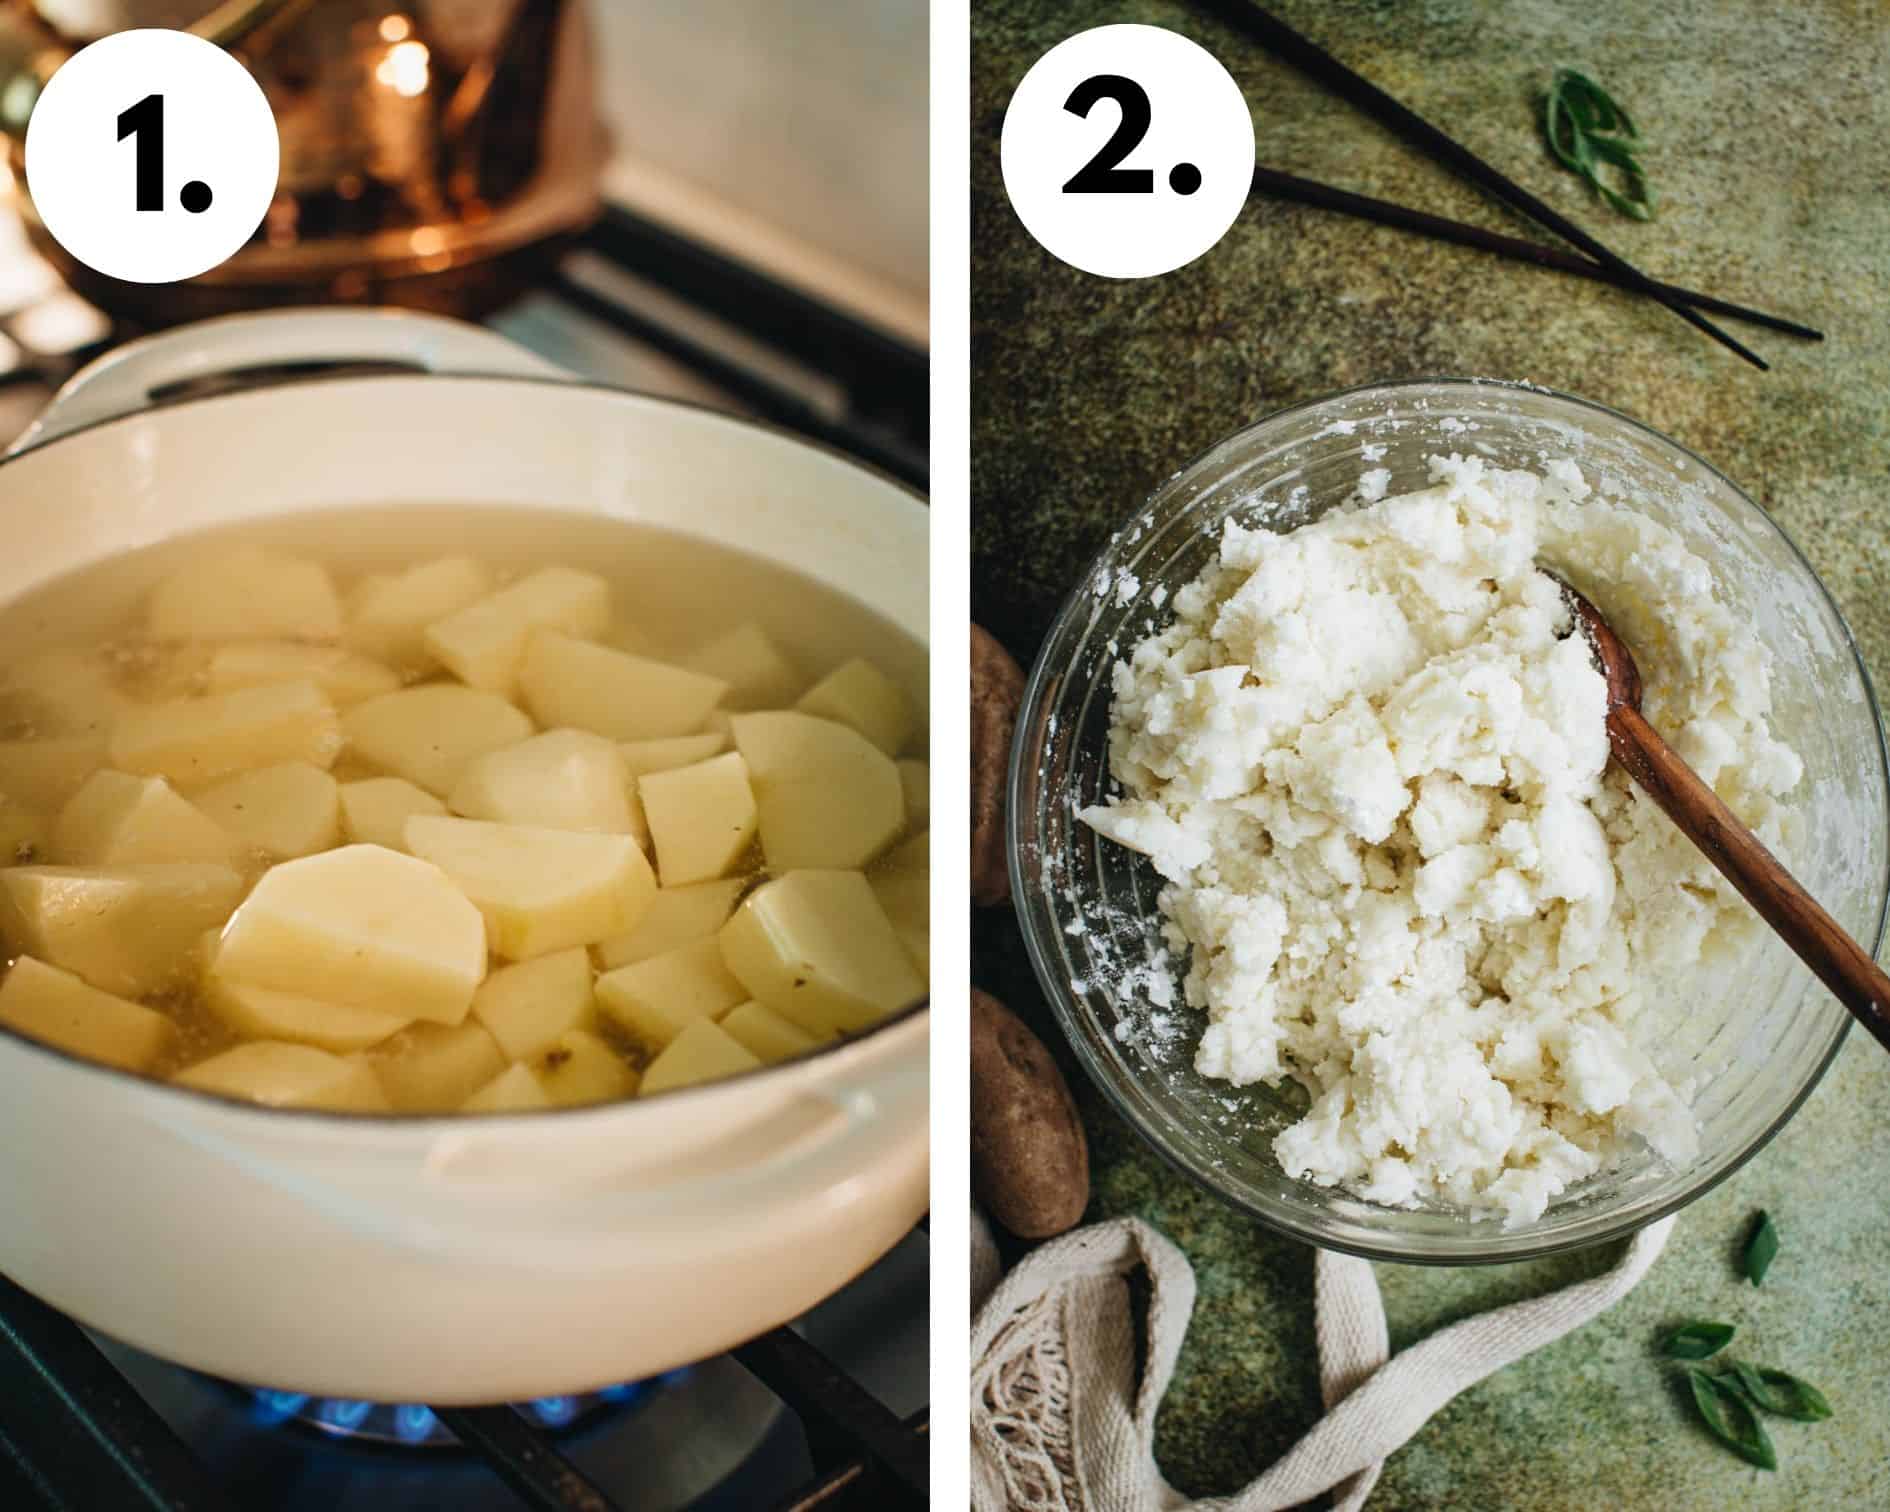 Potato dumpling process steps 1 and 2.